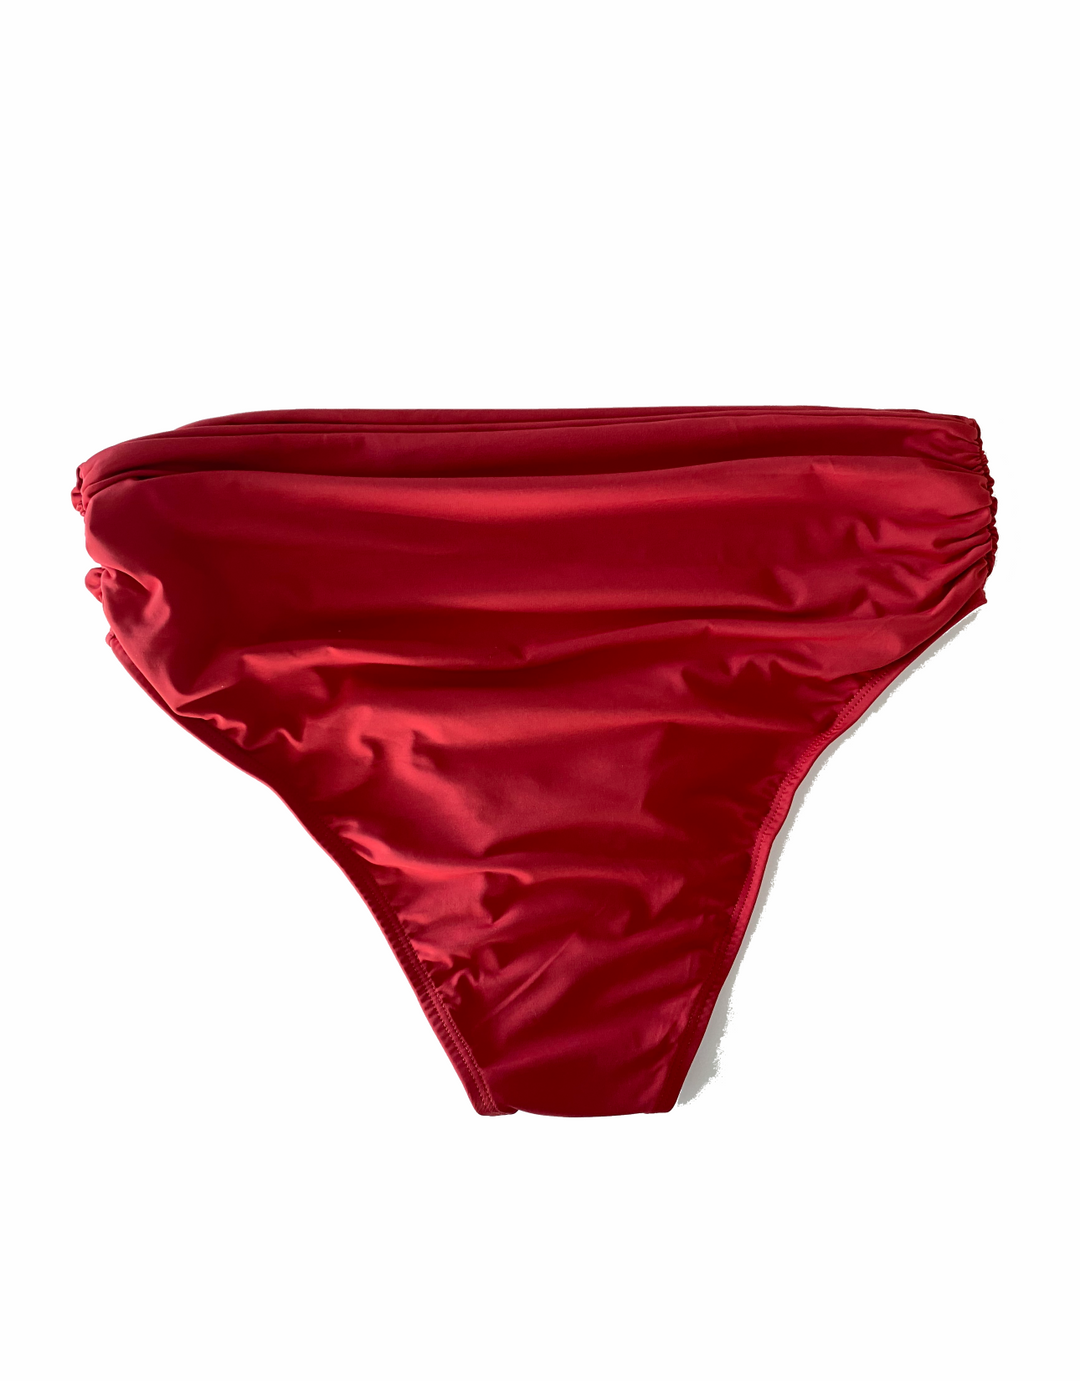 Lenny Niemeyer High Waist Brazilian Bikini Bottom in Coral Red